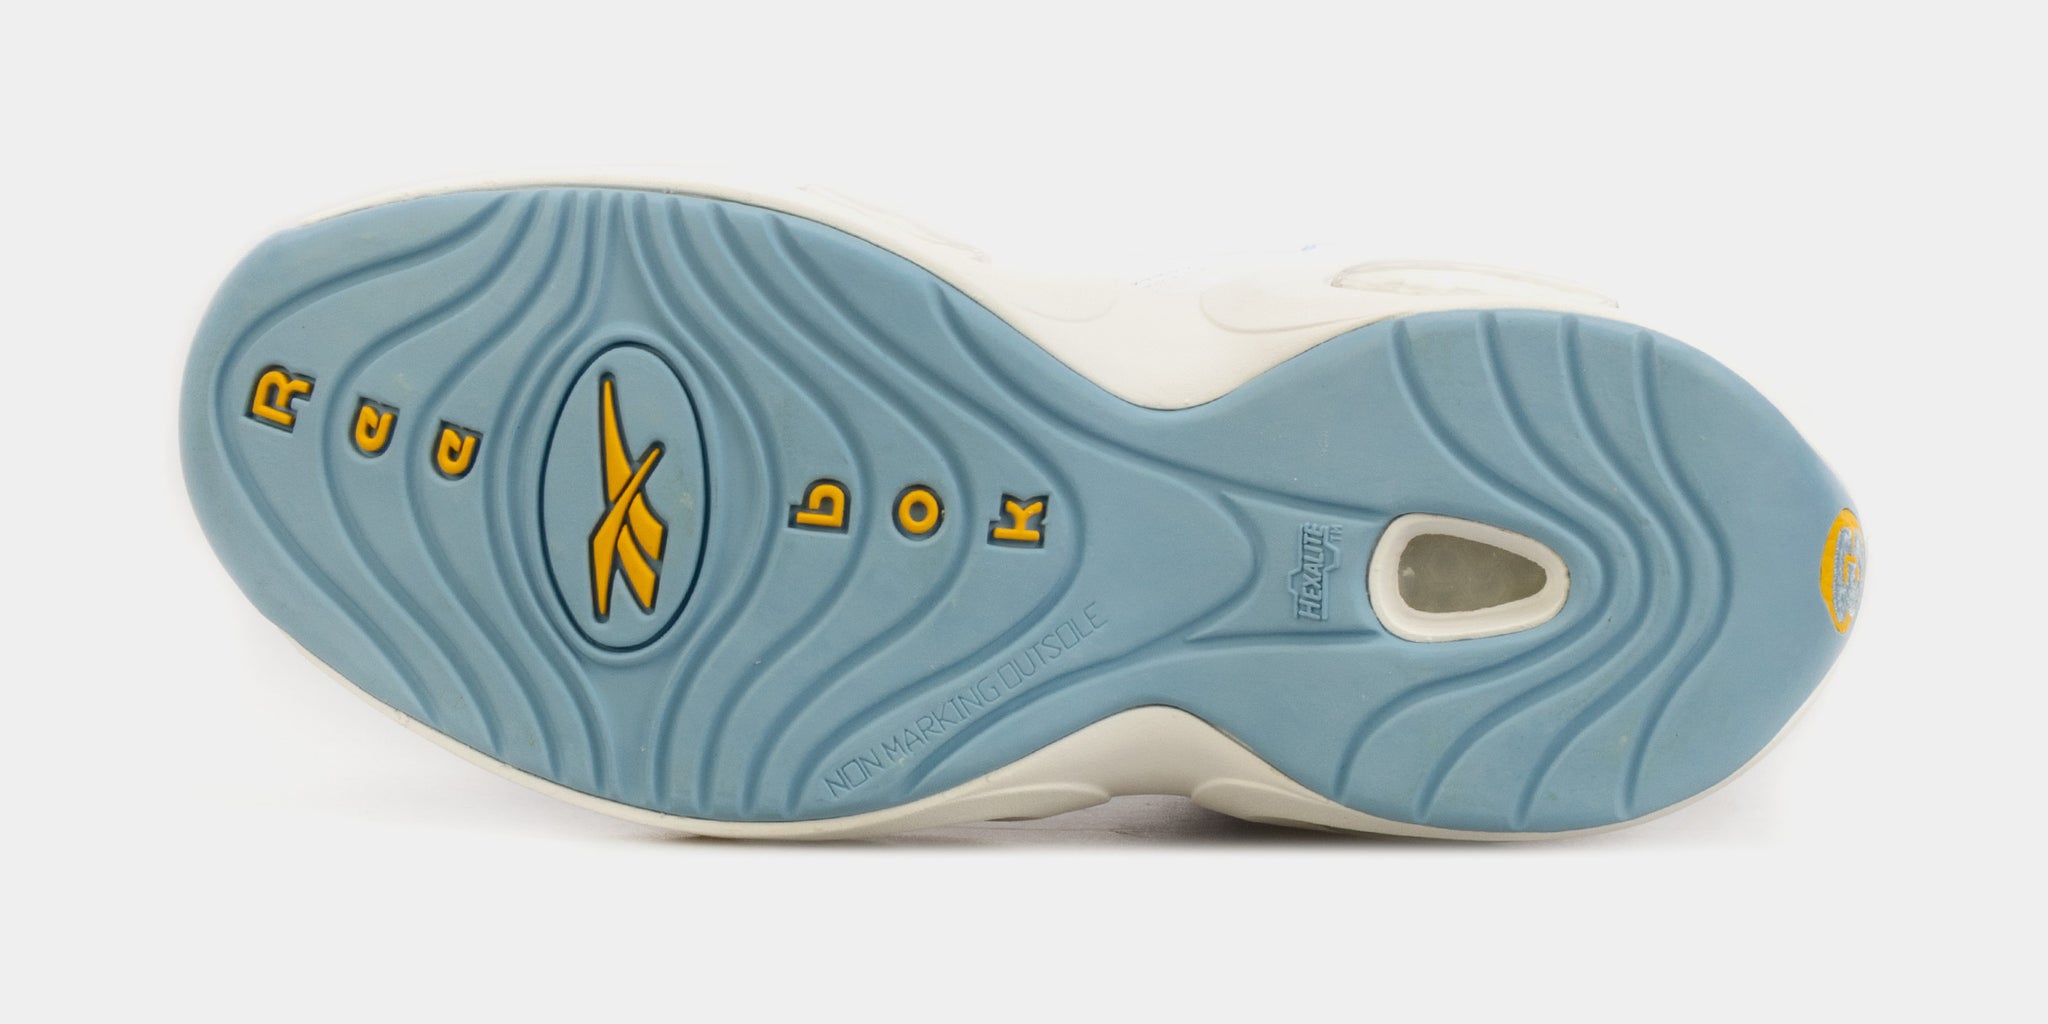 Reebok Question Mid White/Blue/Yellow Men's Basketball Shoe